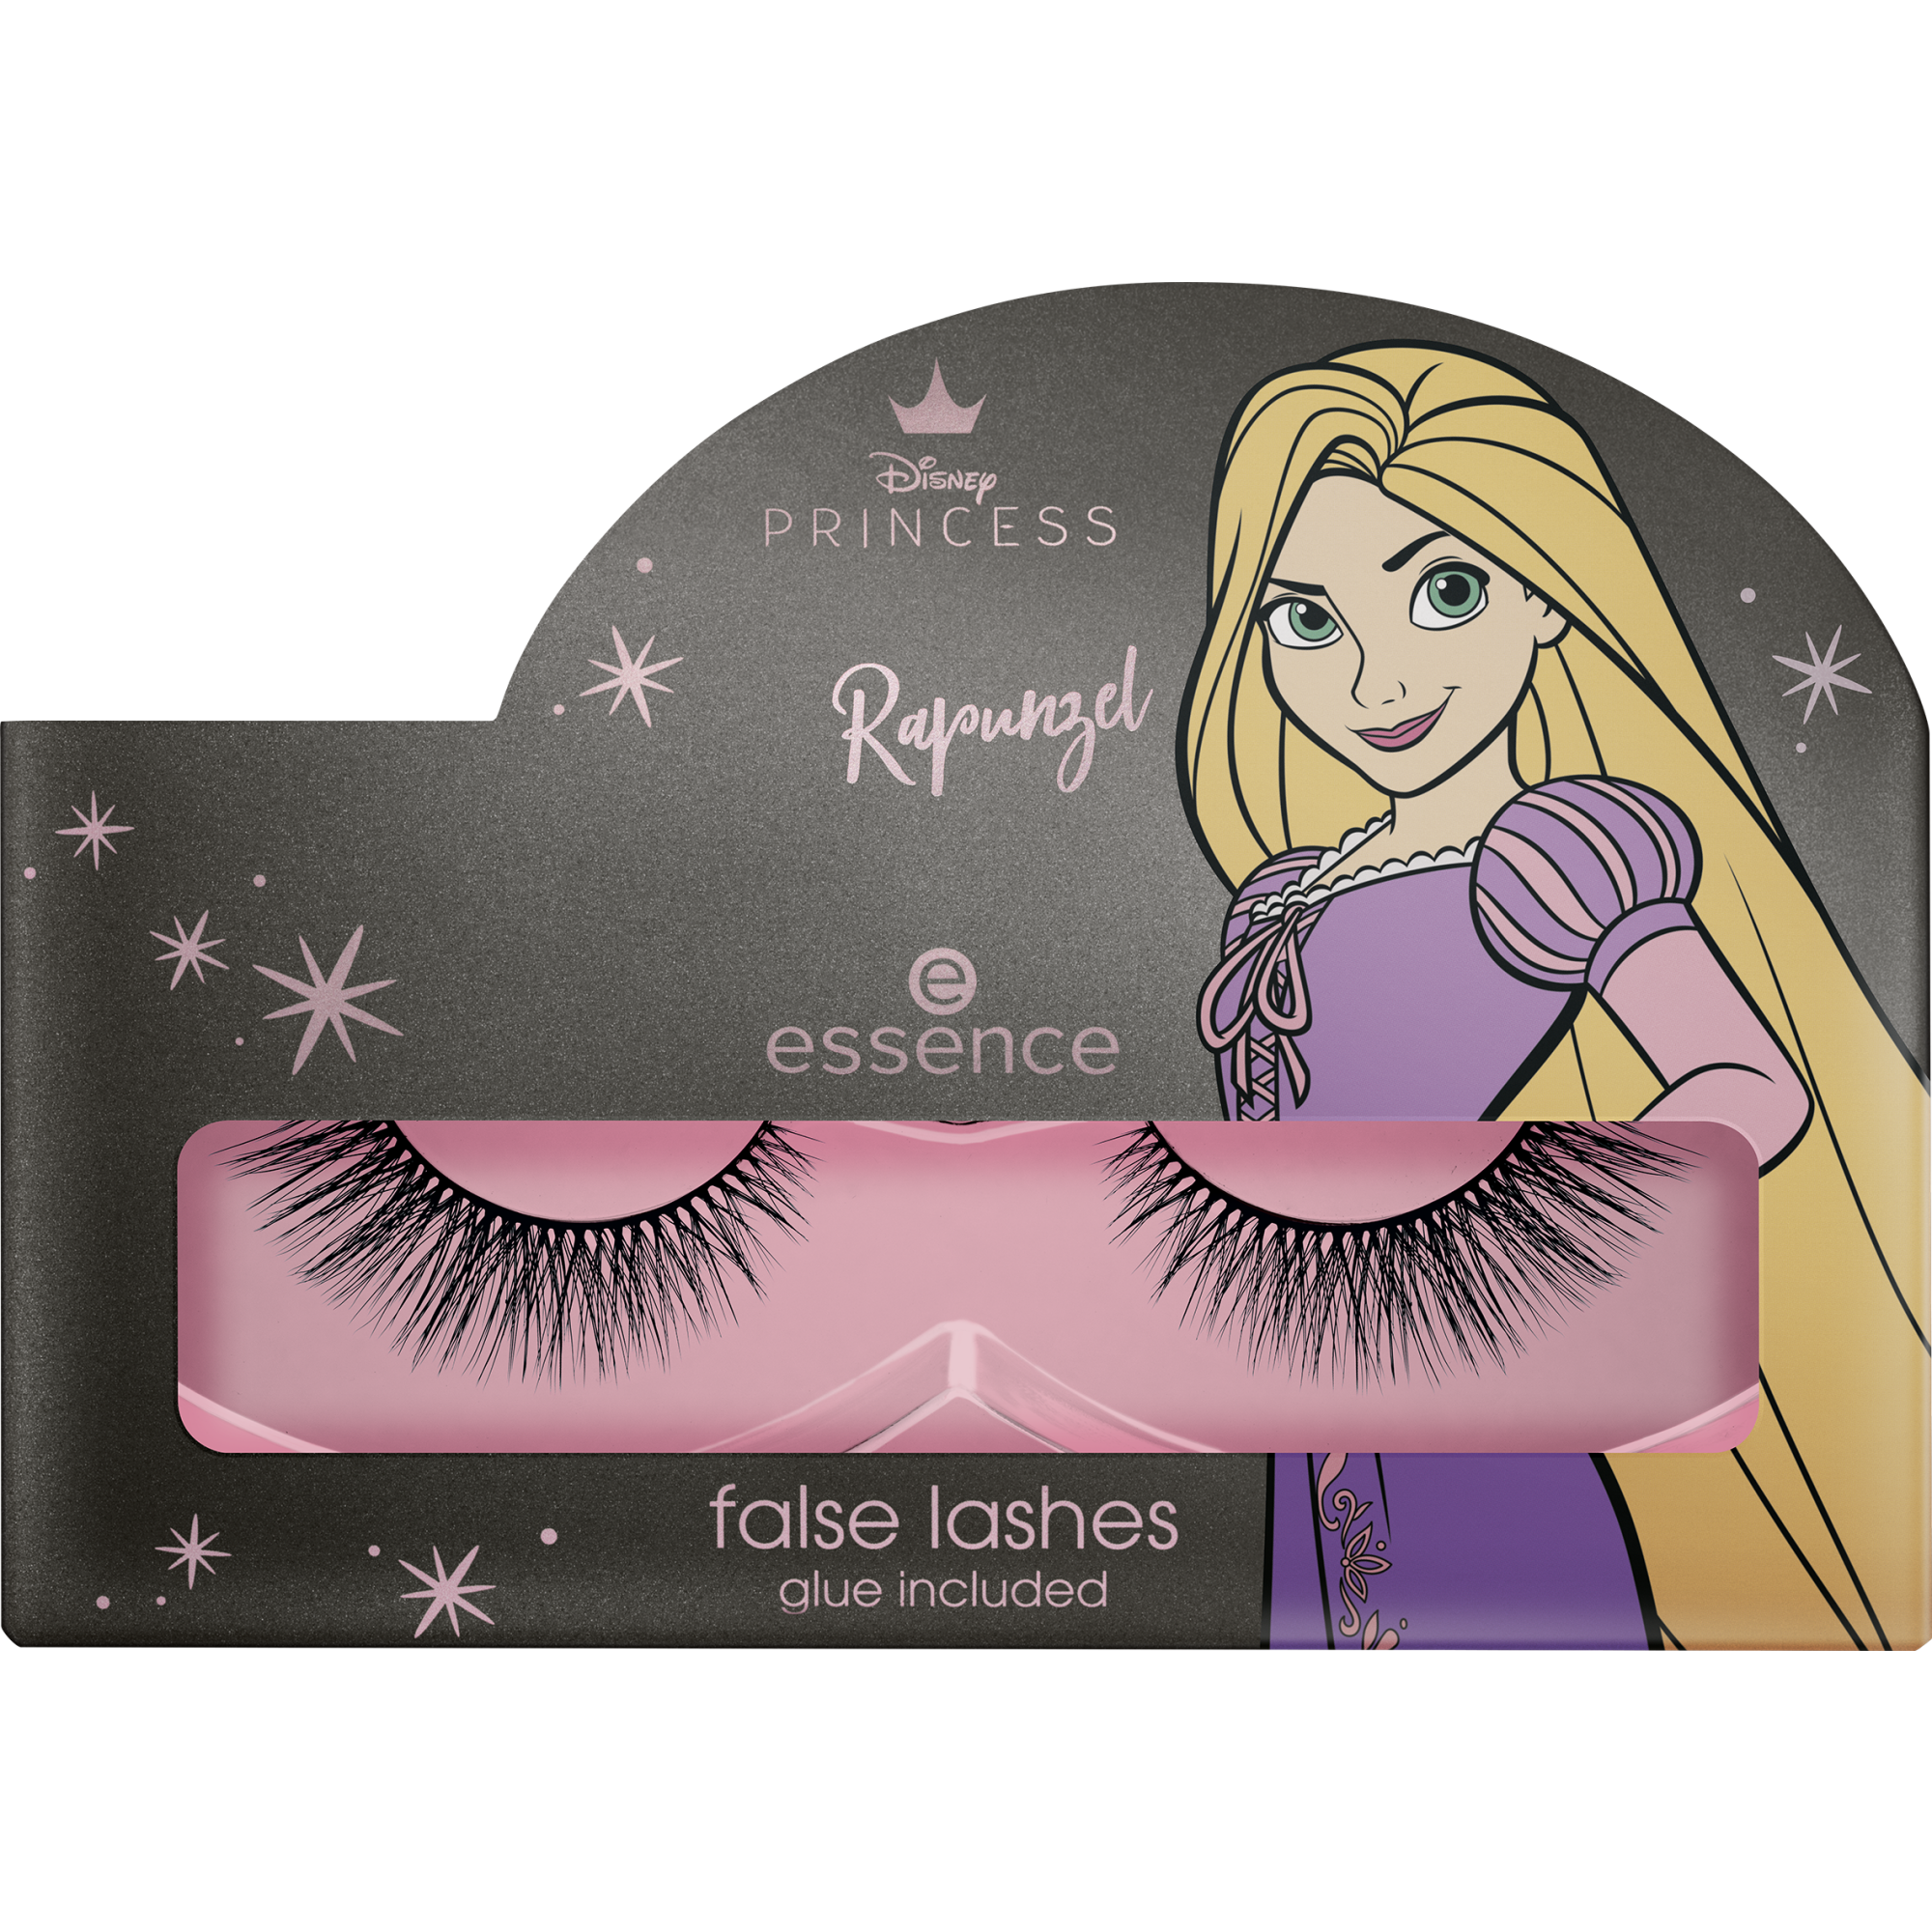 Disney Princess Rapunzel false lashes